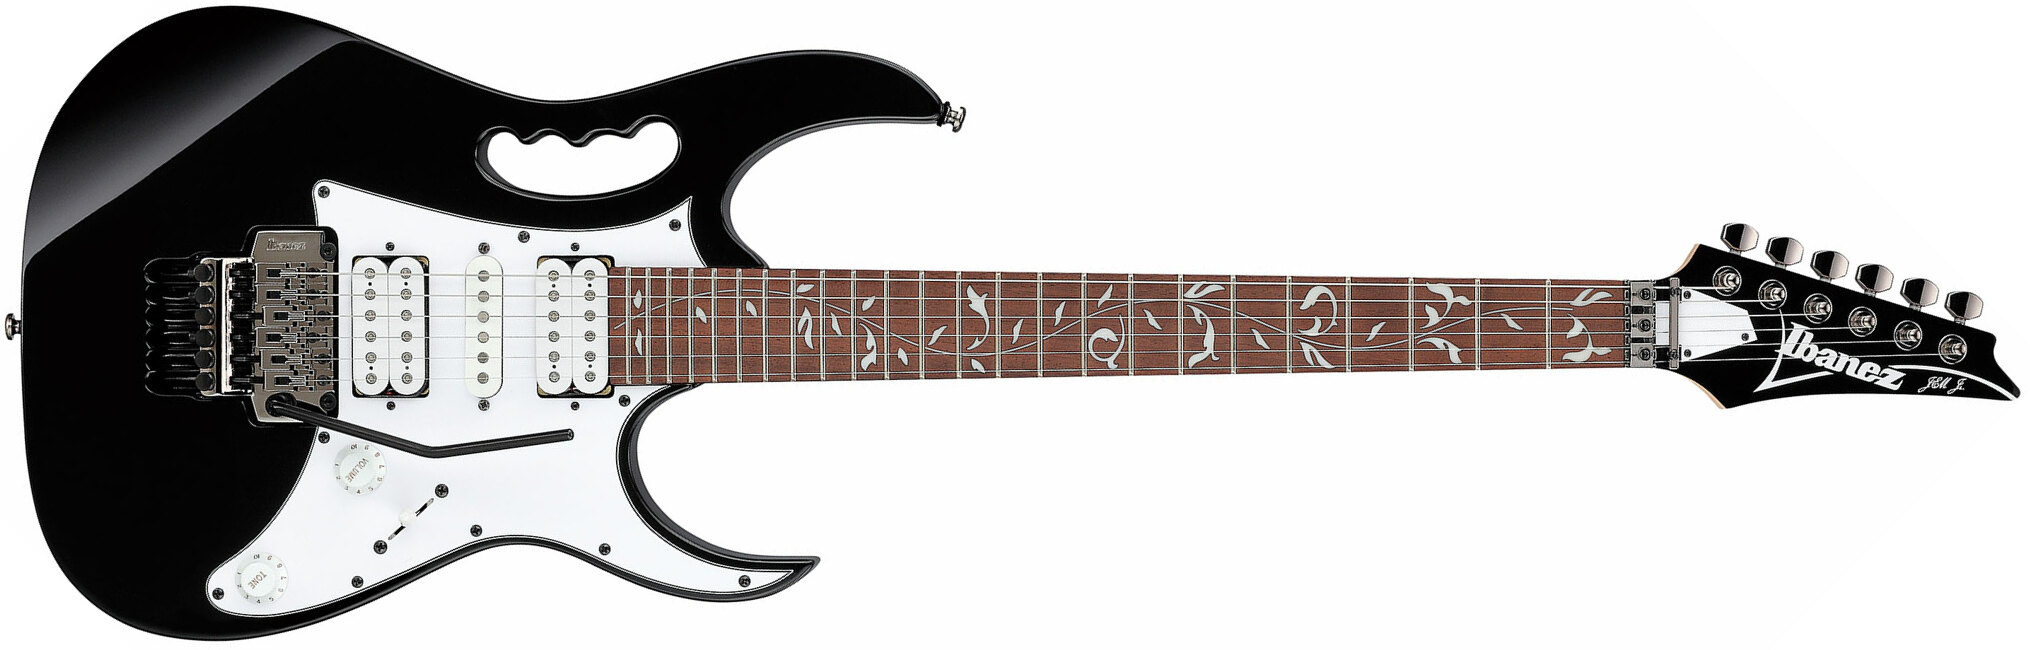 Ibanez Steve Vai Jemjr Bk Signature Hsh Fr Jat - Black - E-Gitarre in Str-Form - Main picture